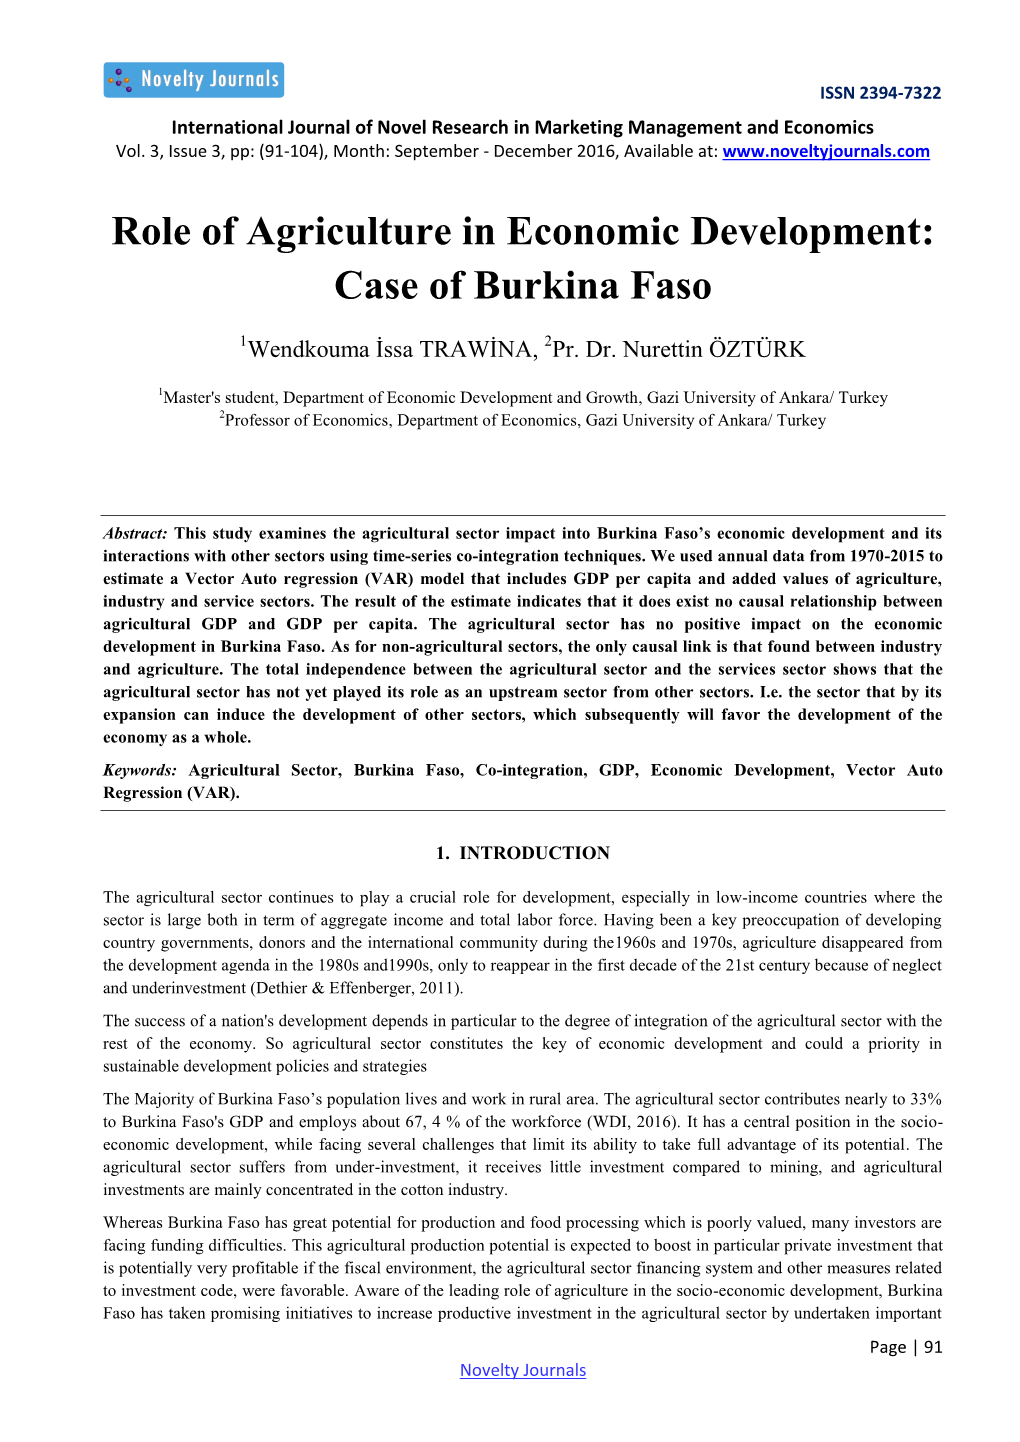 Role of Agriculture in Economic Development: Case of Burkina Faso